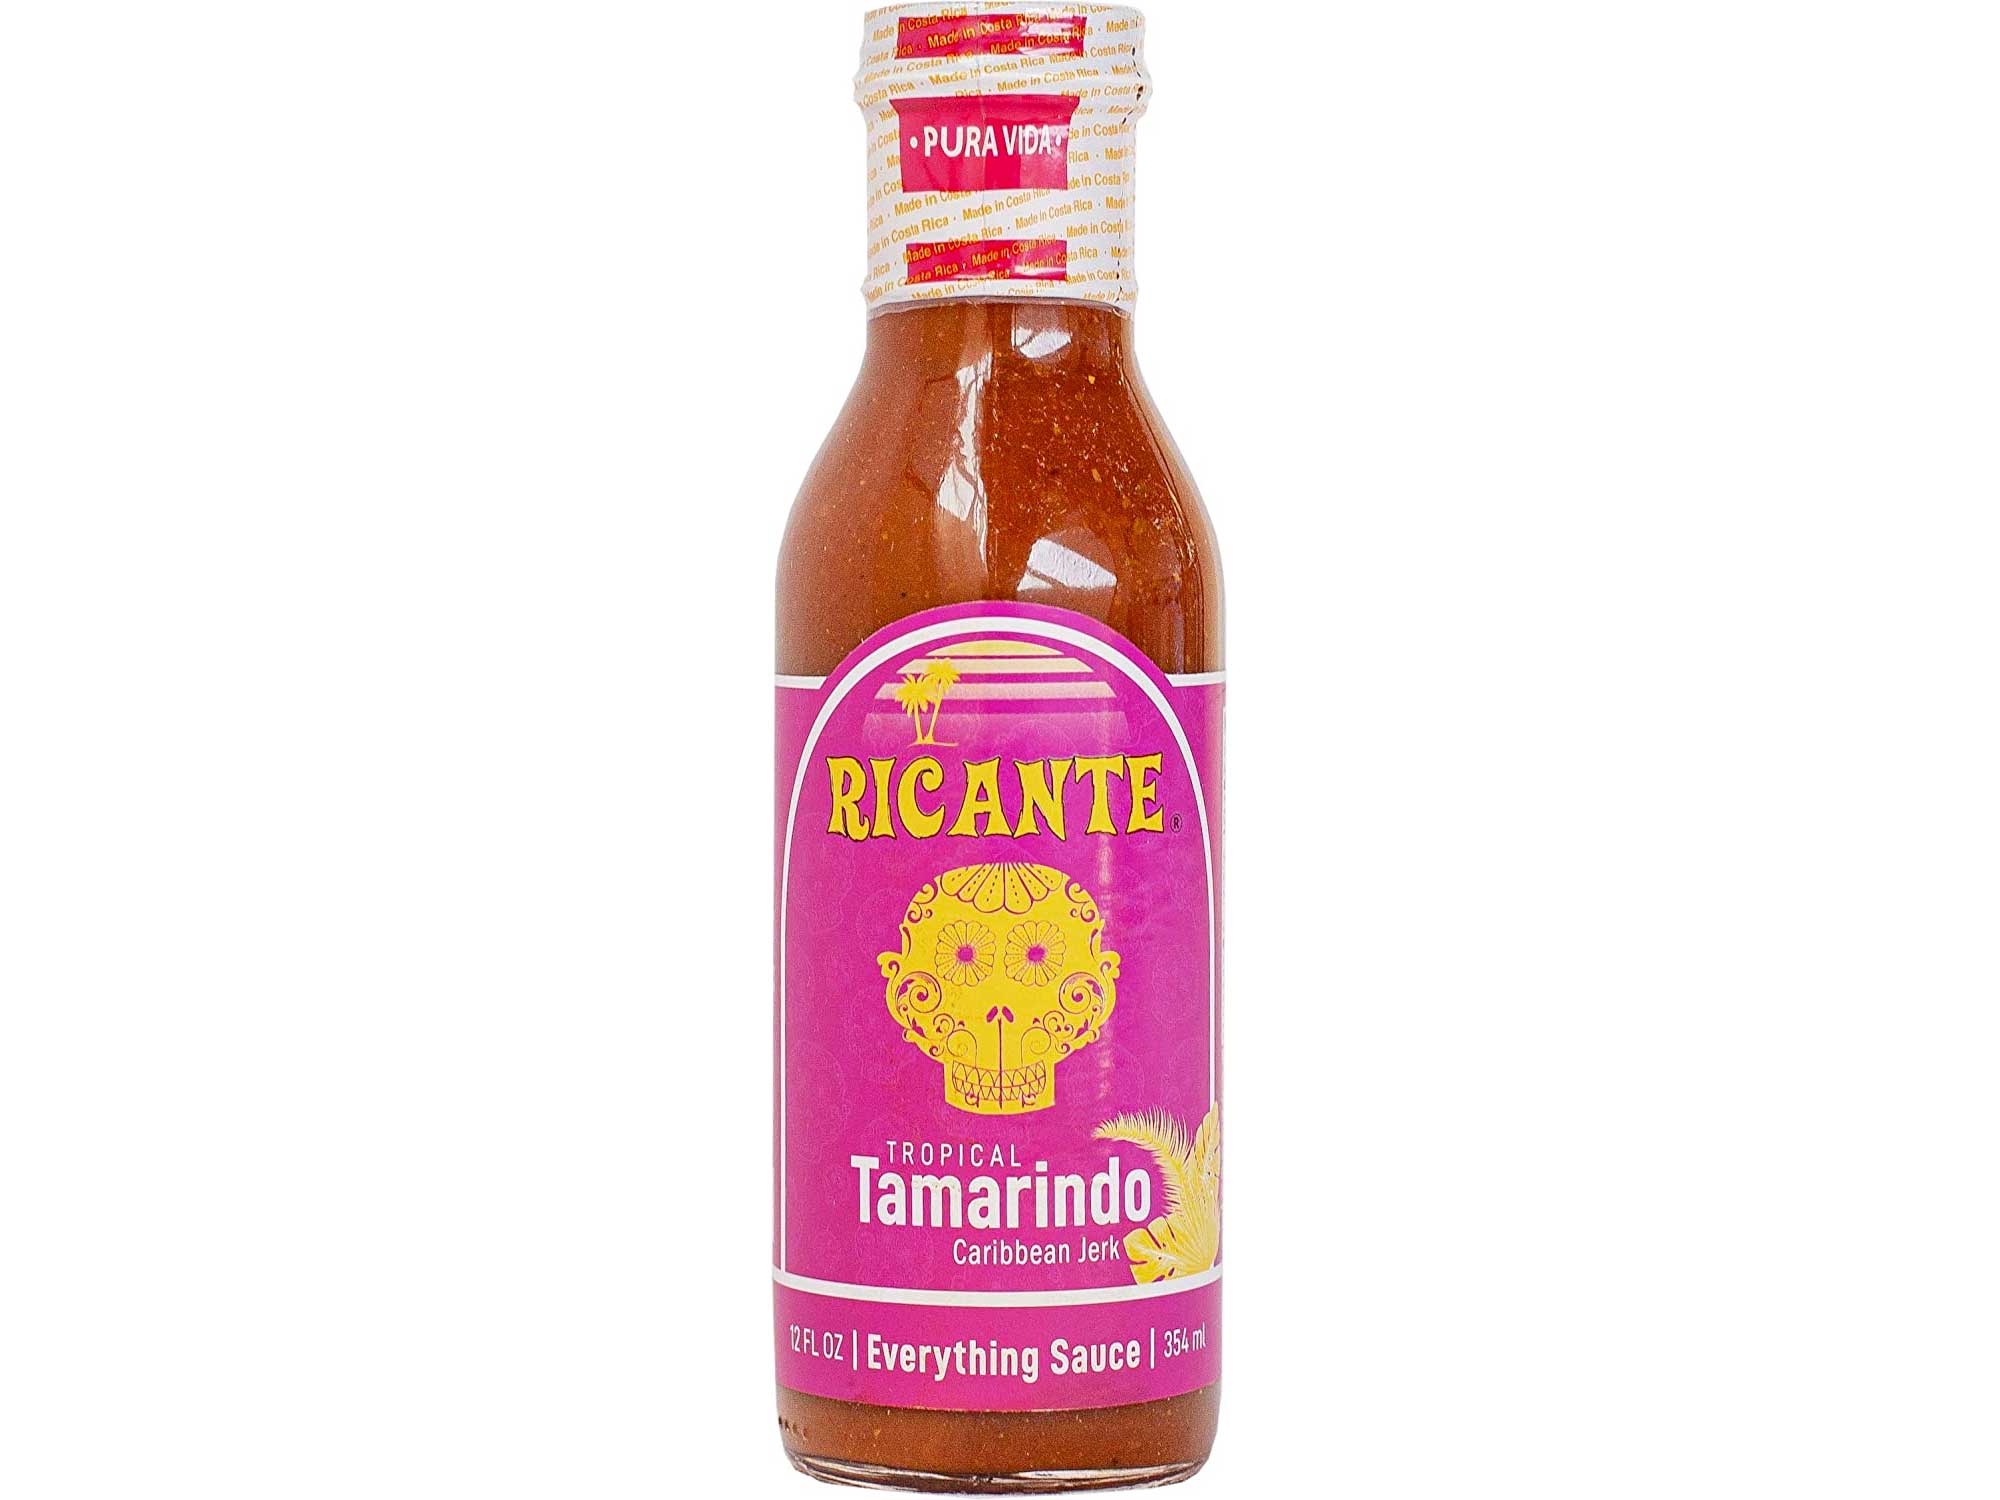 Ricante Tropical Tamarindo Caribbean Jerk Everything Sauce tastes good